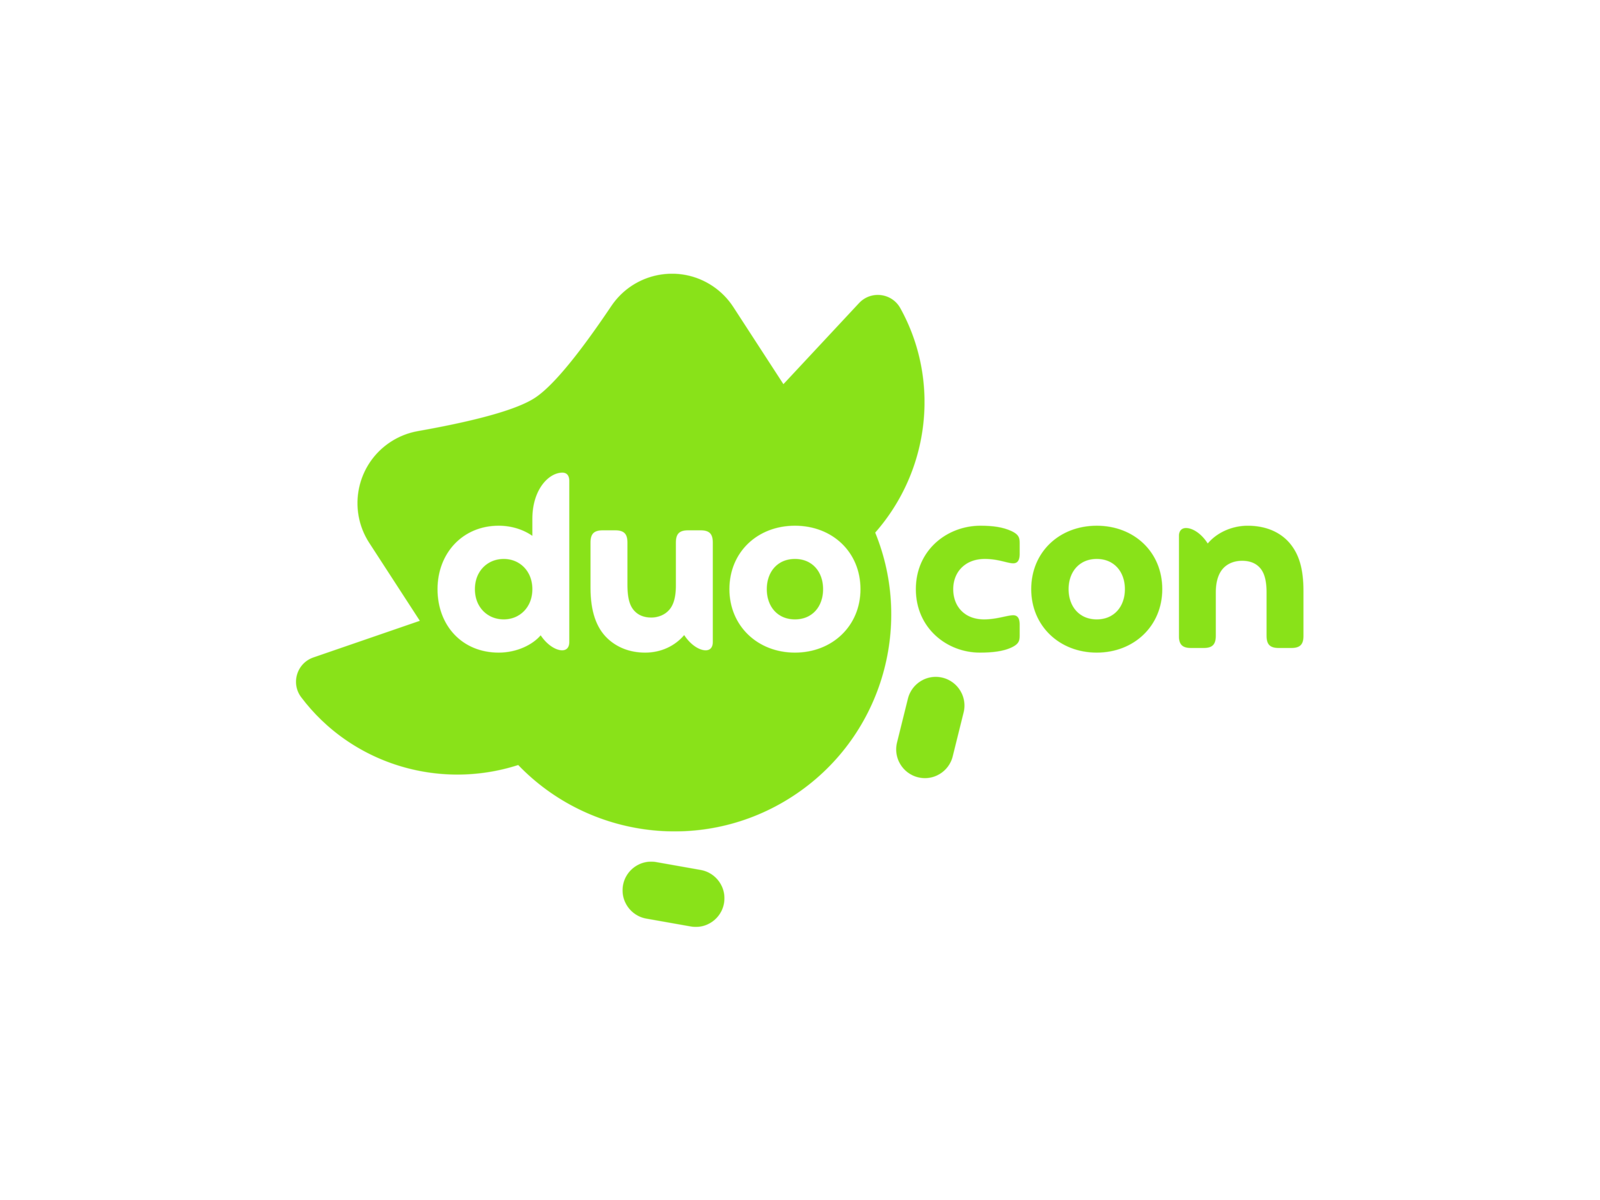 Duocon Logo by Jack for Duolingo on Dribbble